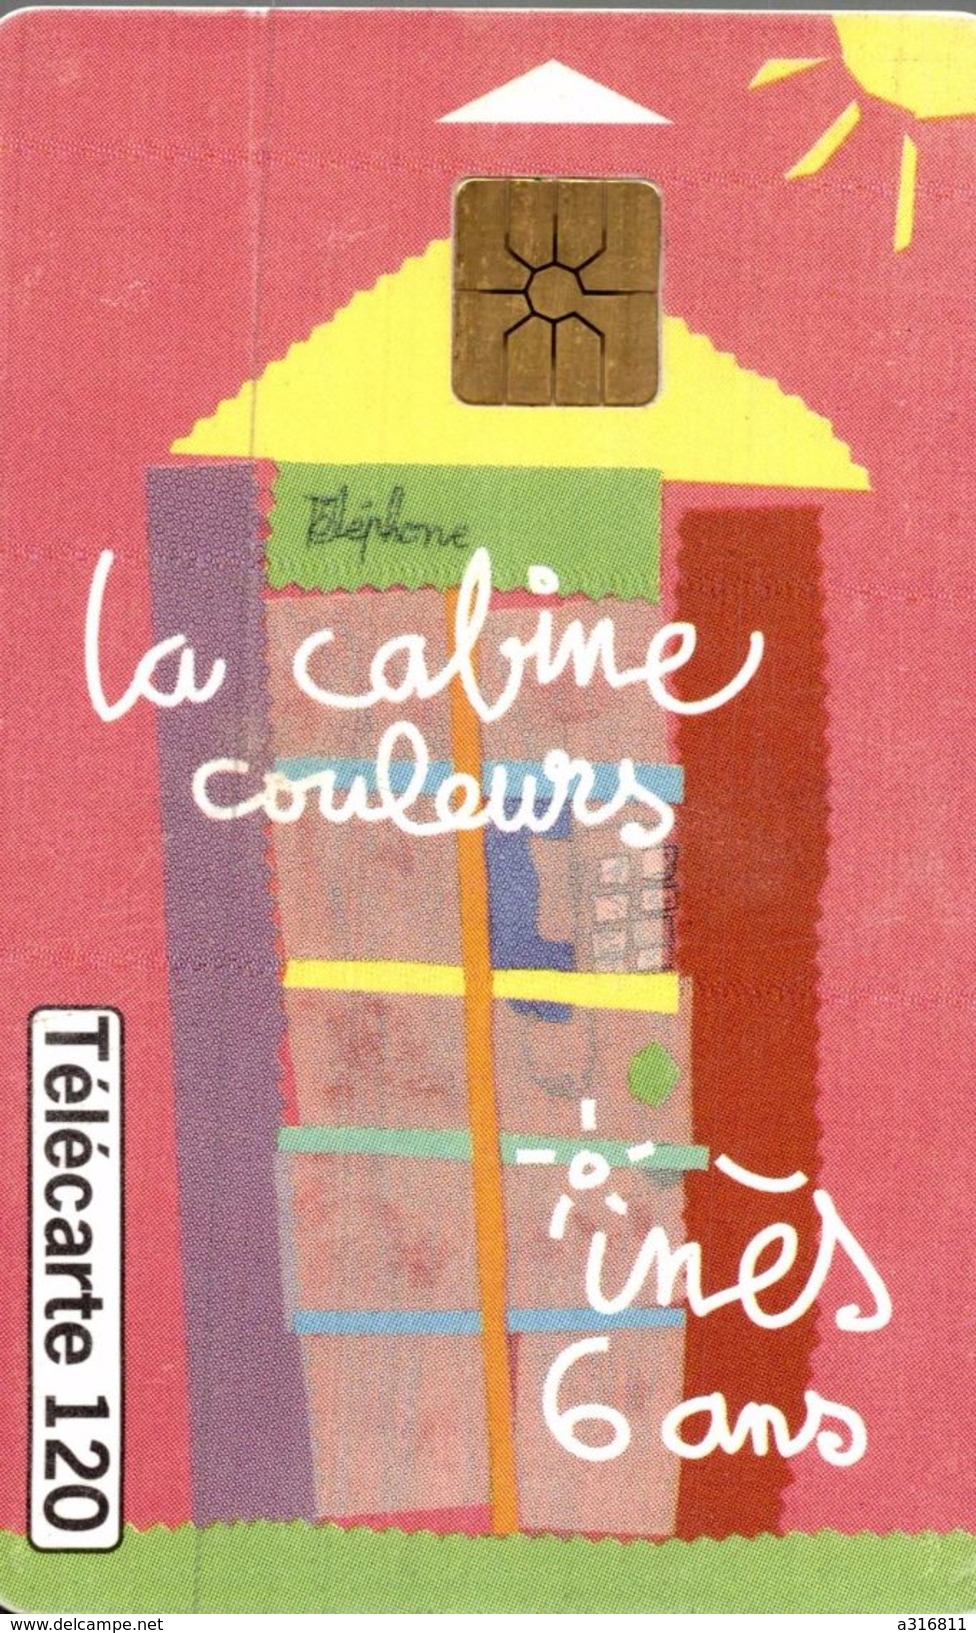 LA CABINE COULEURS - 120 Einheiten